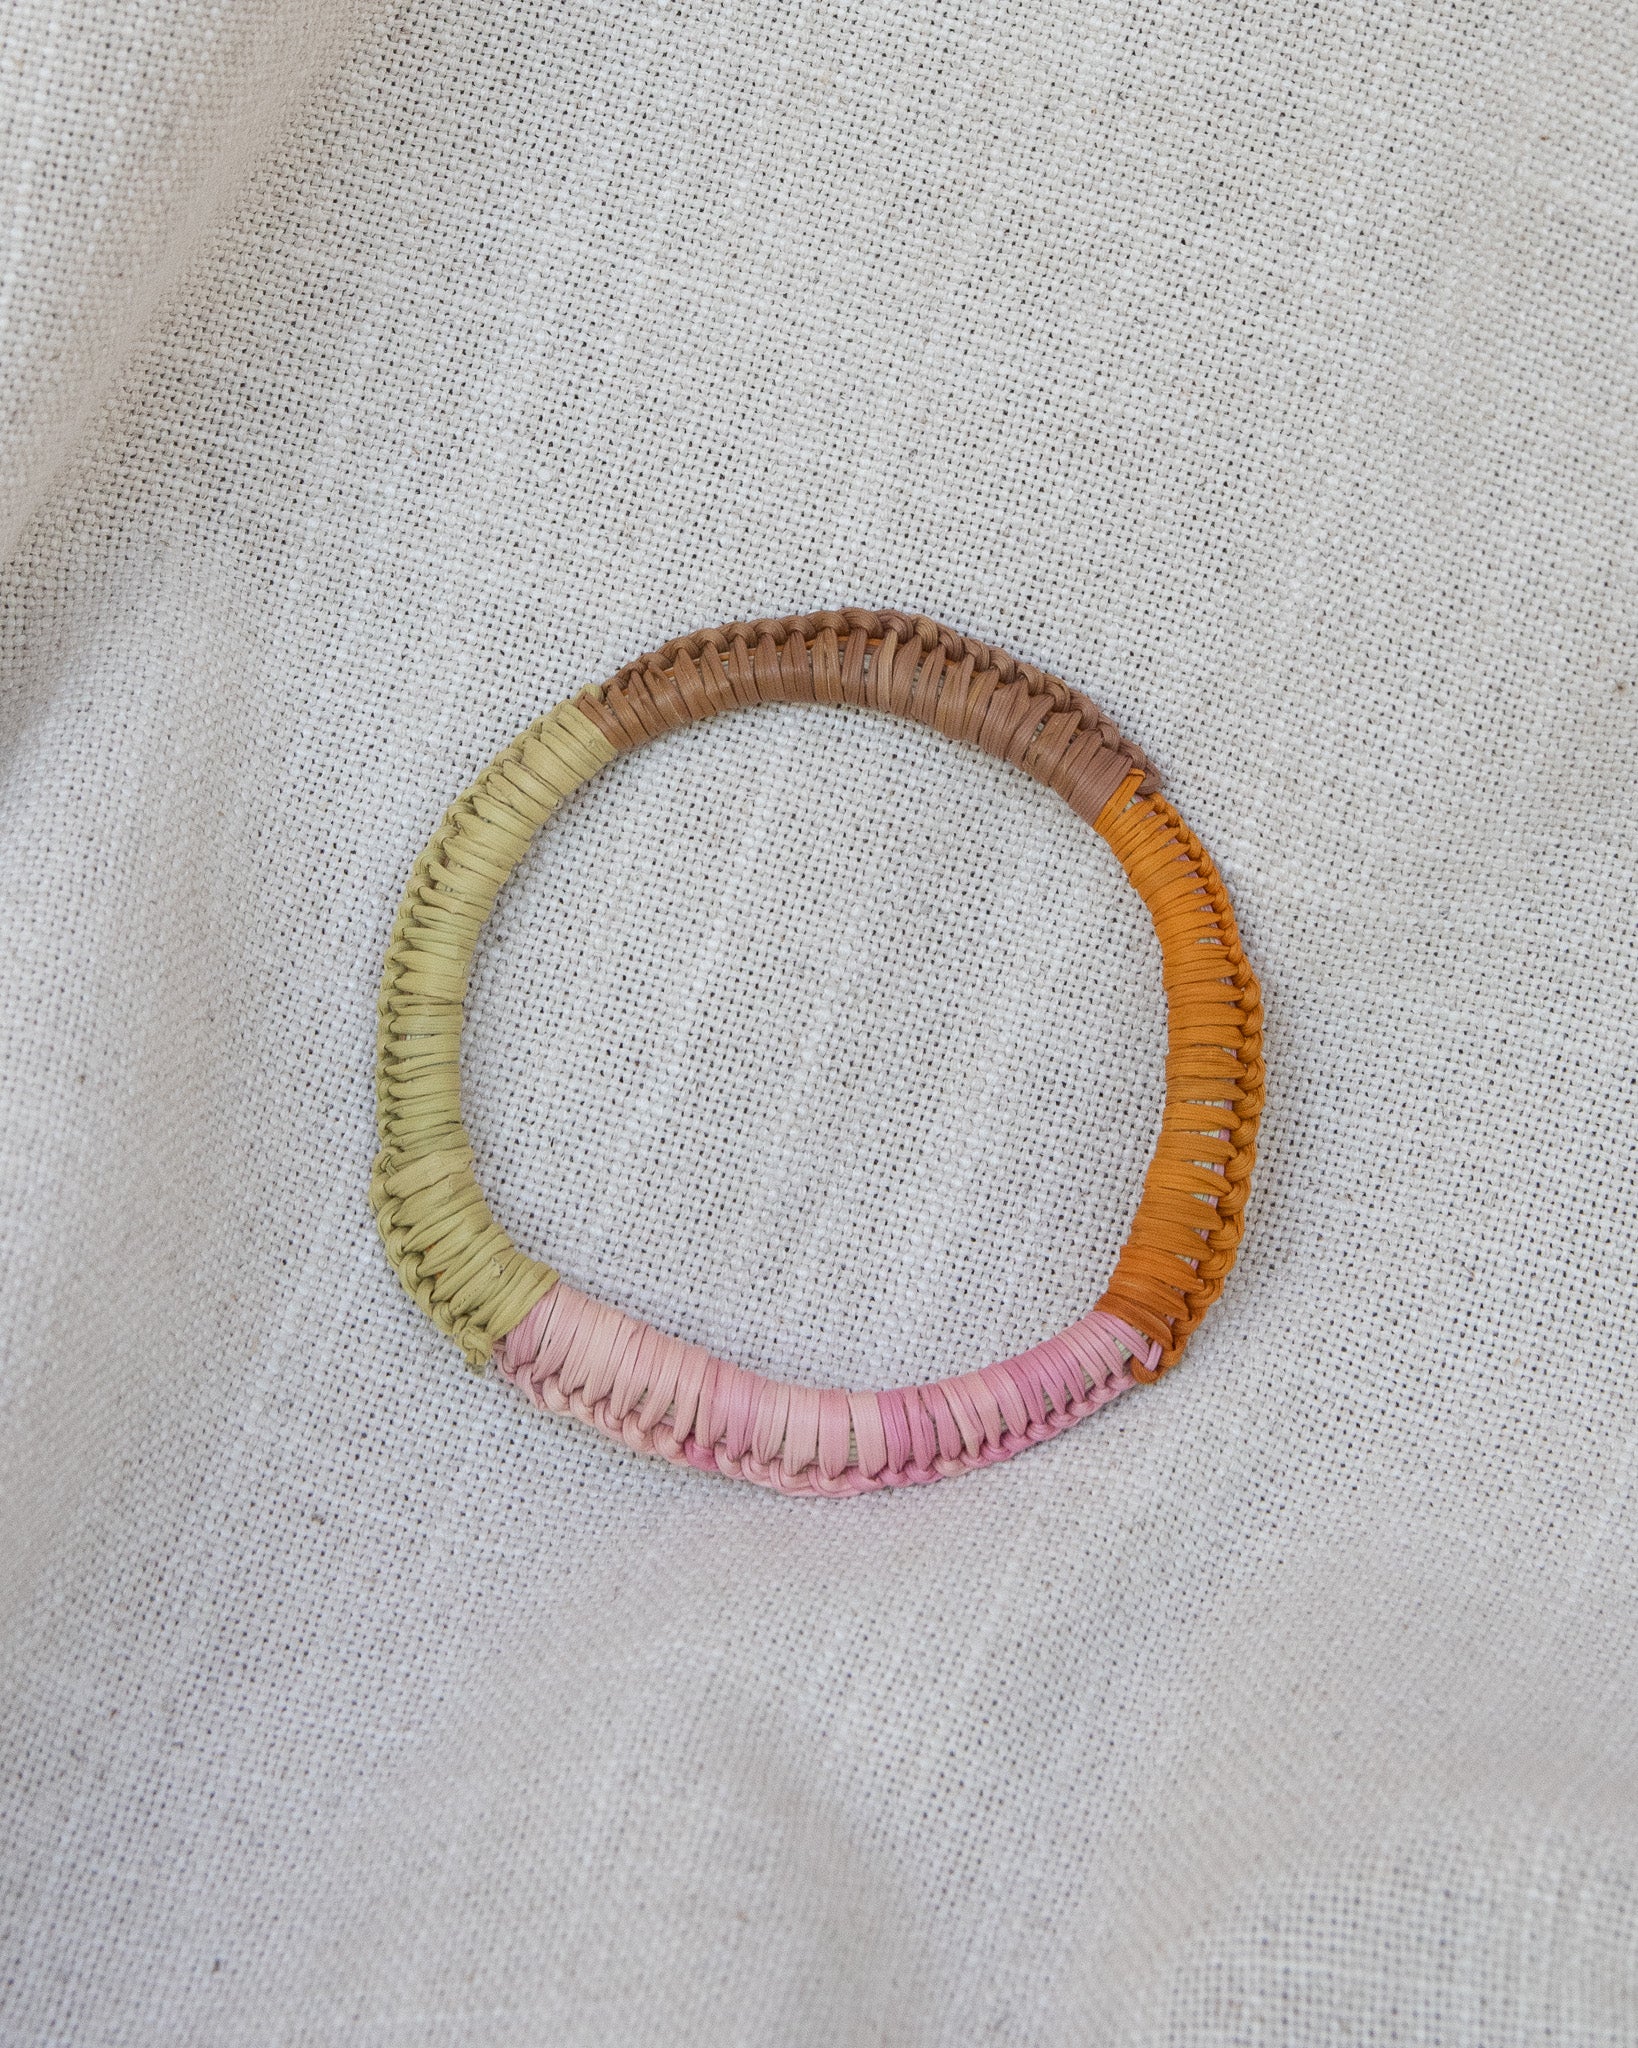 Aboriginal multi coloured woven womens bracelet